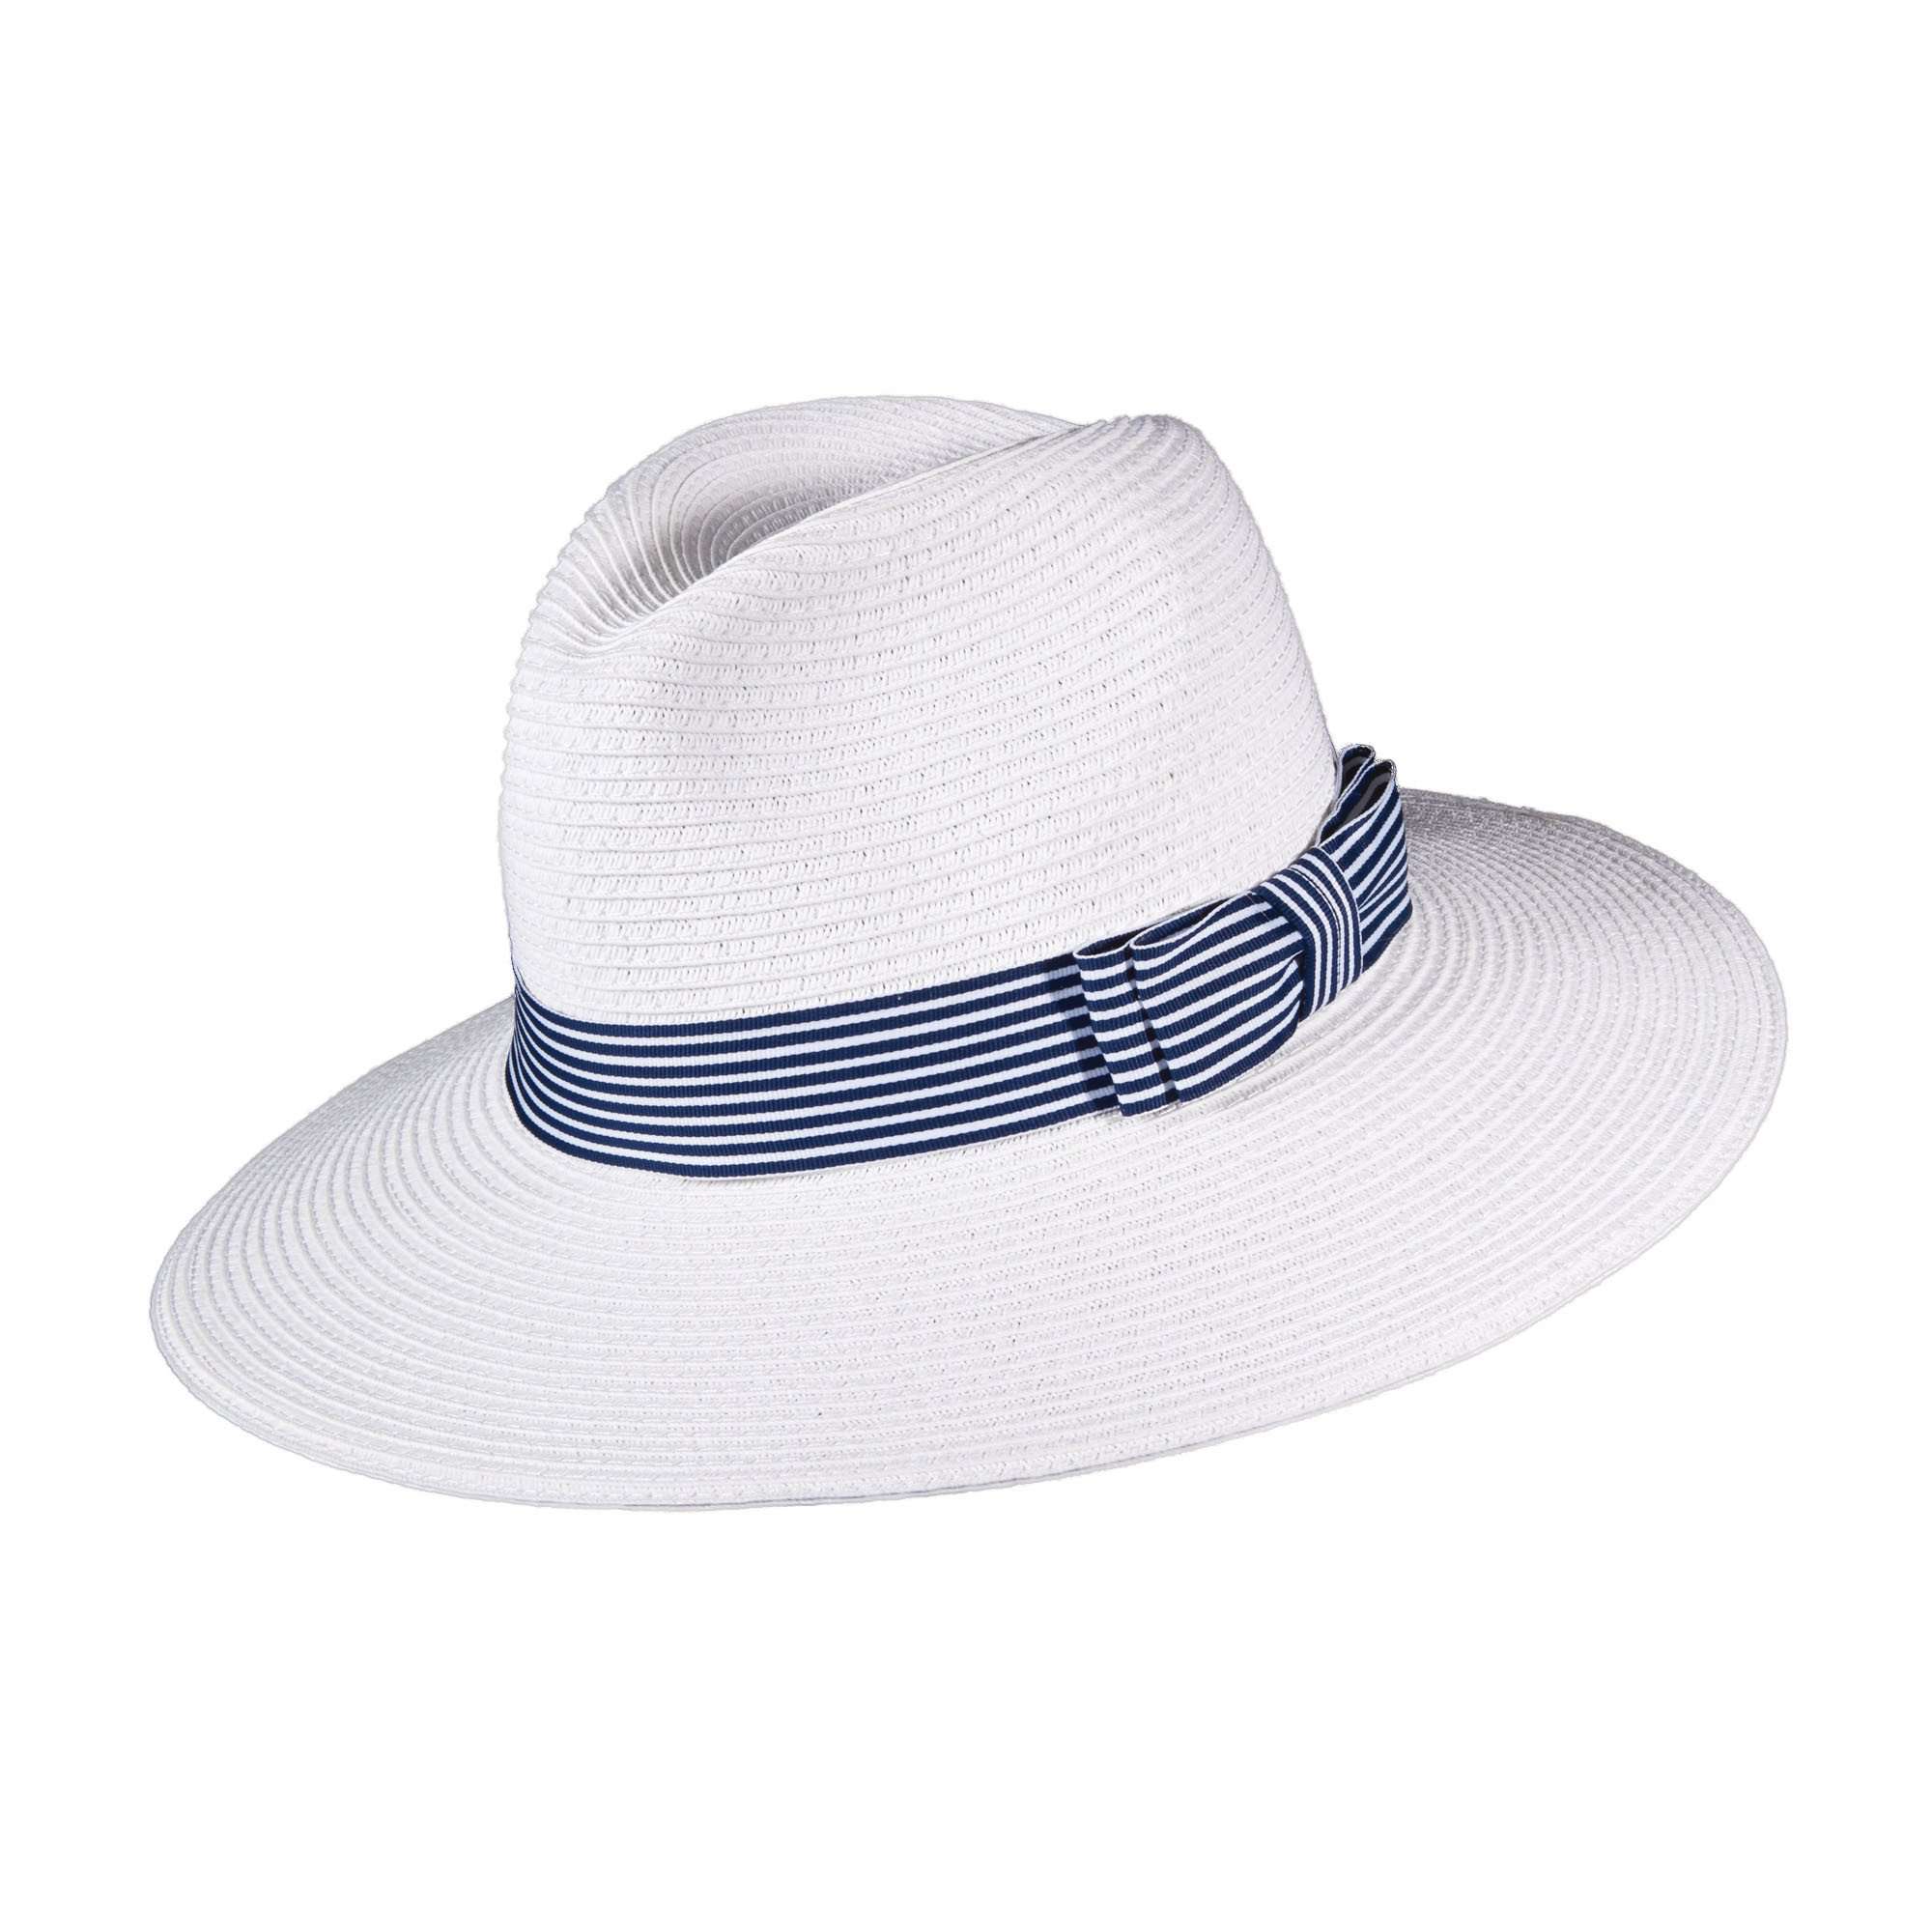 Callanan Safari Hat with Striped Band Safari Hat Callanan Hats cr23wh White Medium (57 cm) 